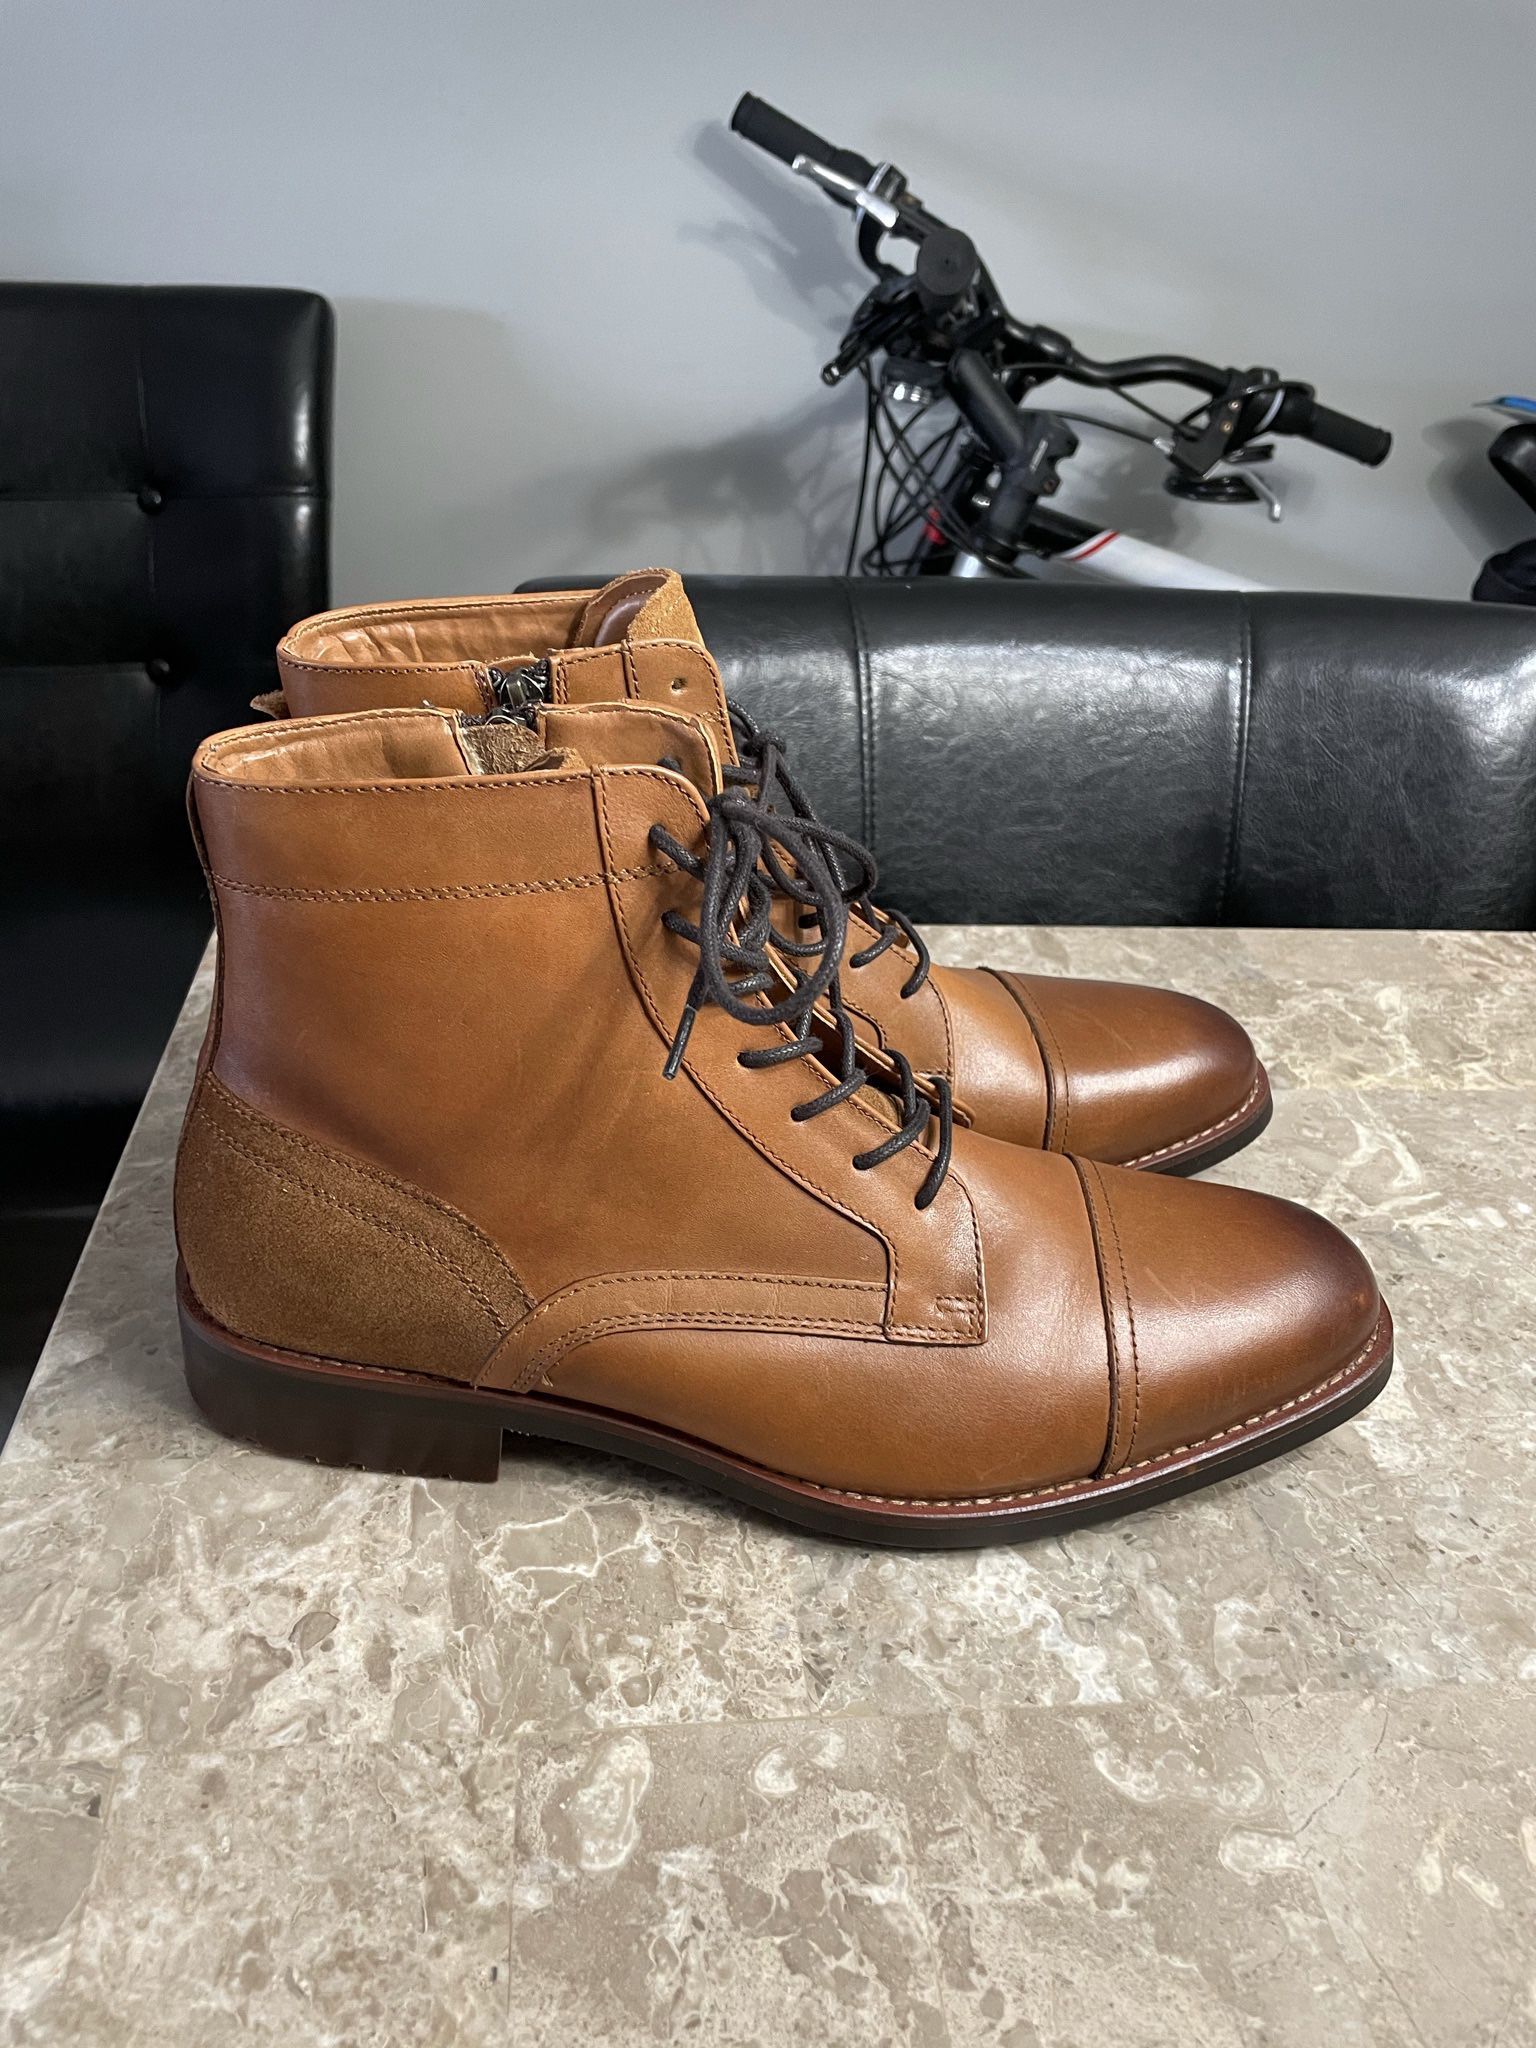 Aldo Brand New Size 9 Boots